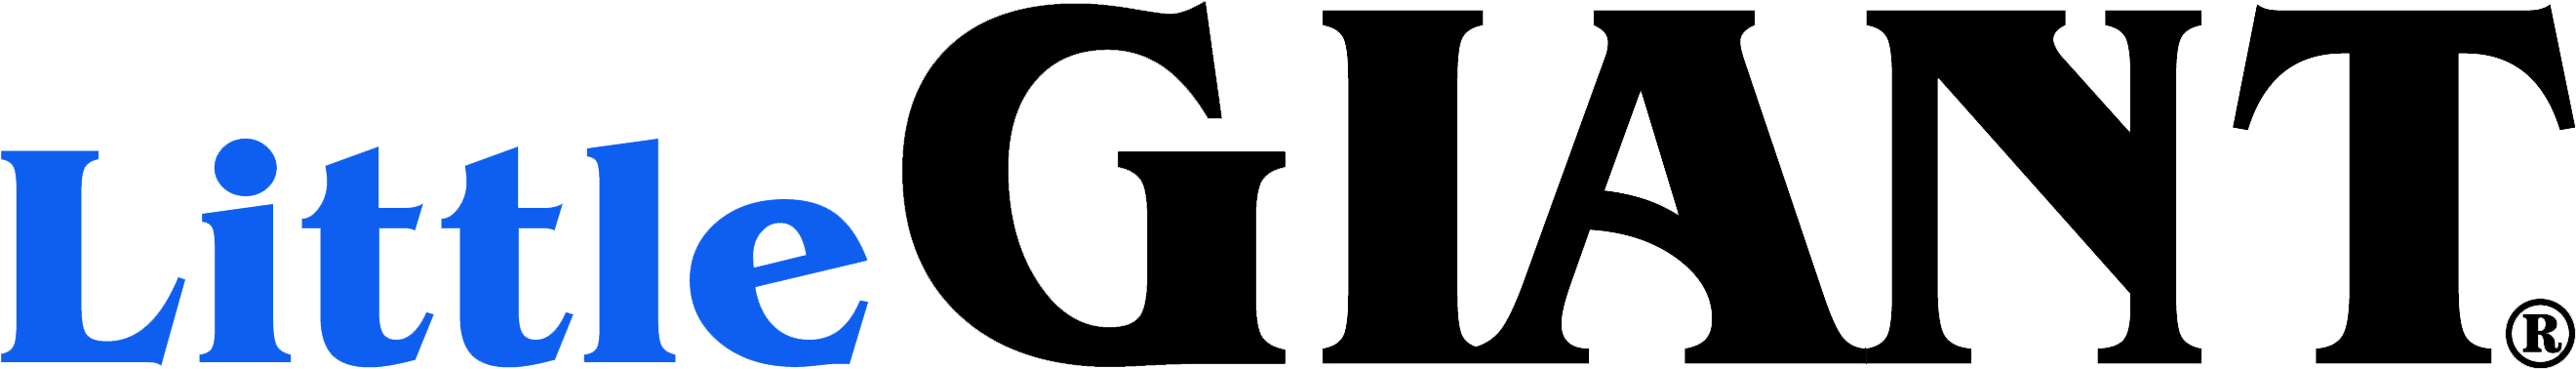 Little Giant - Little Giant Pump Logo (2700x413)